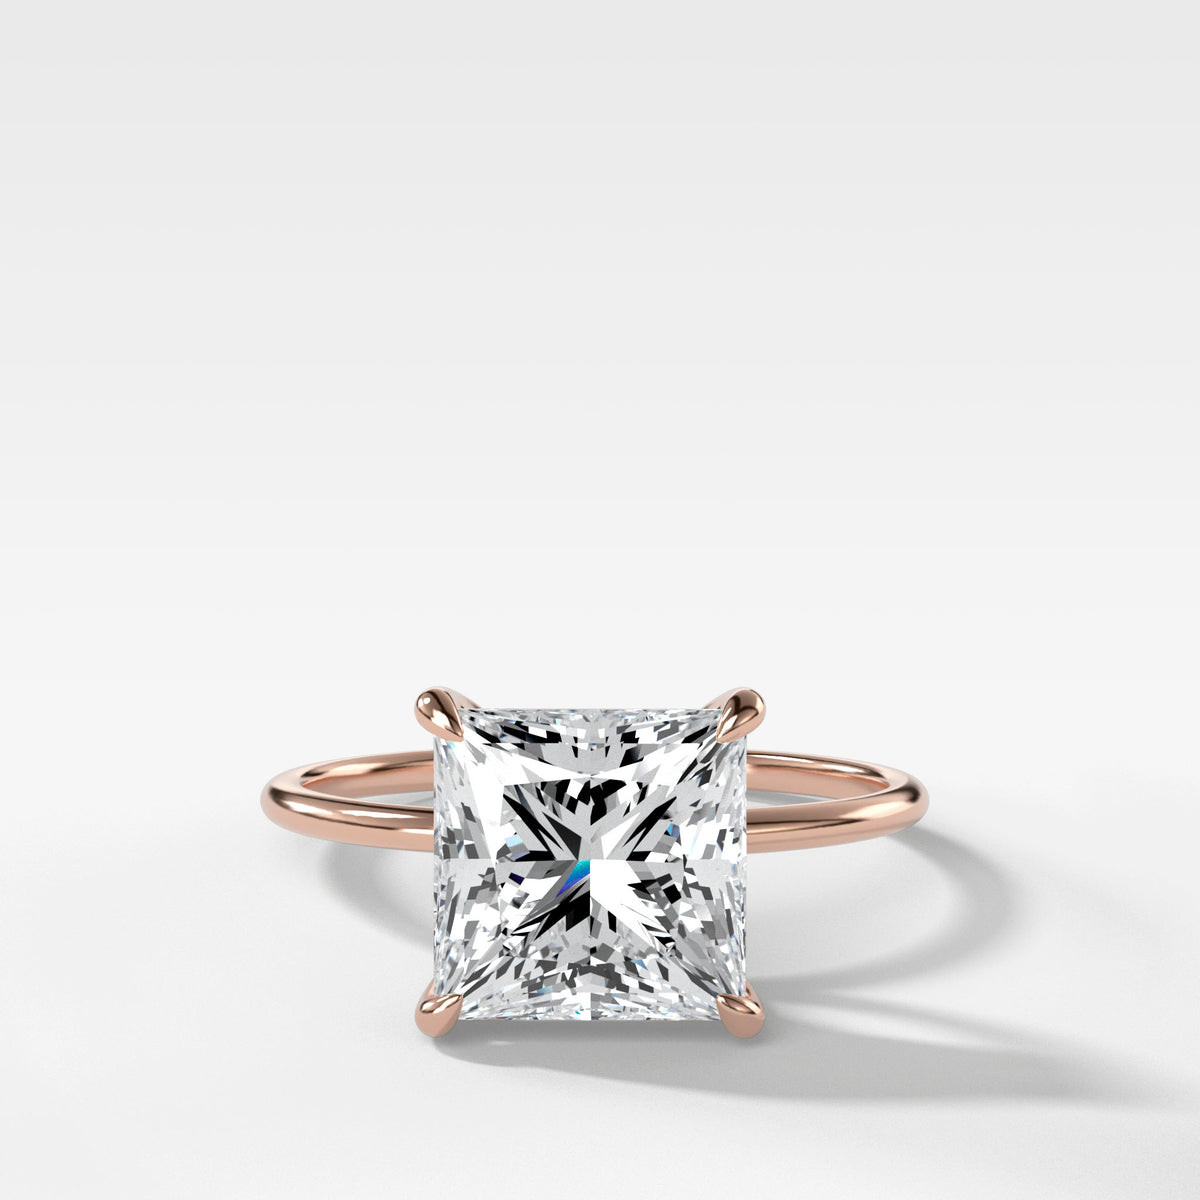 Princess Cut Engagement Rings - Seattle & Bellevue - Joseph Jewelry